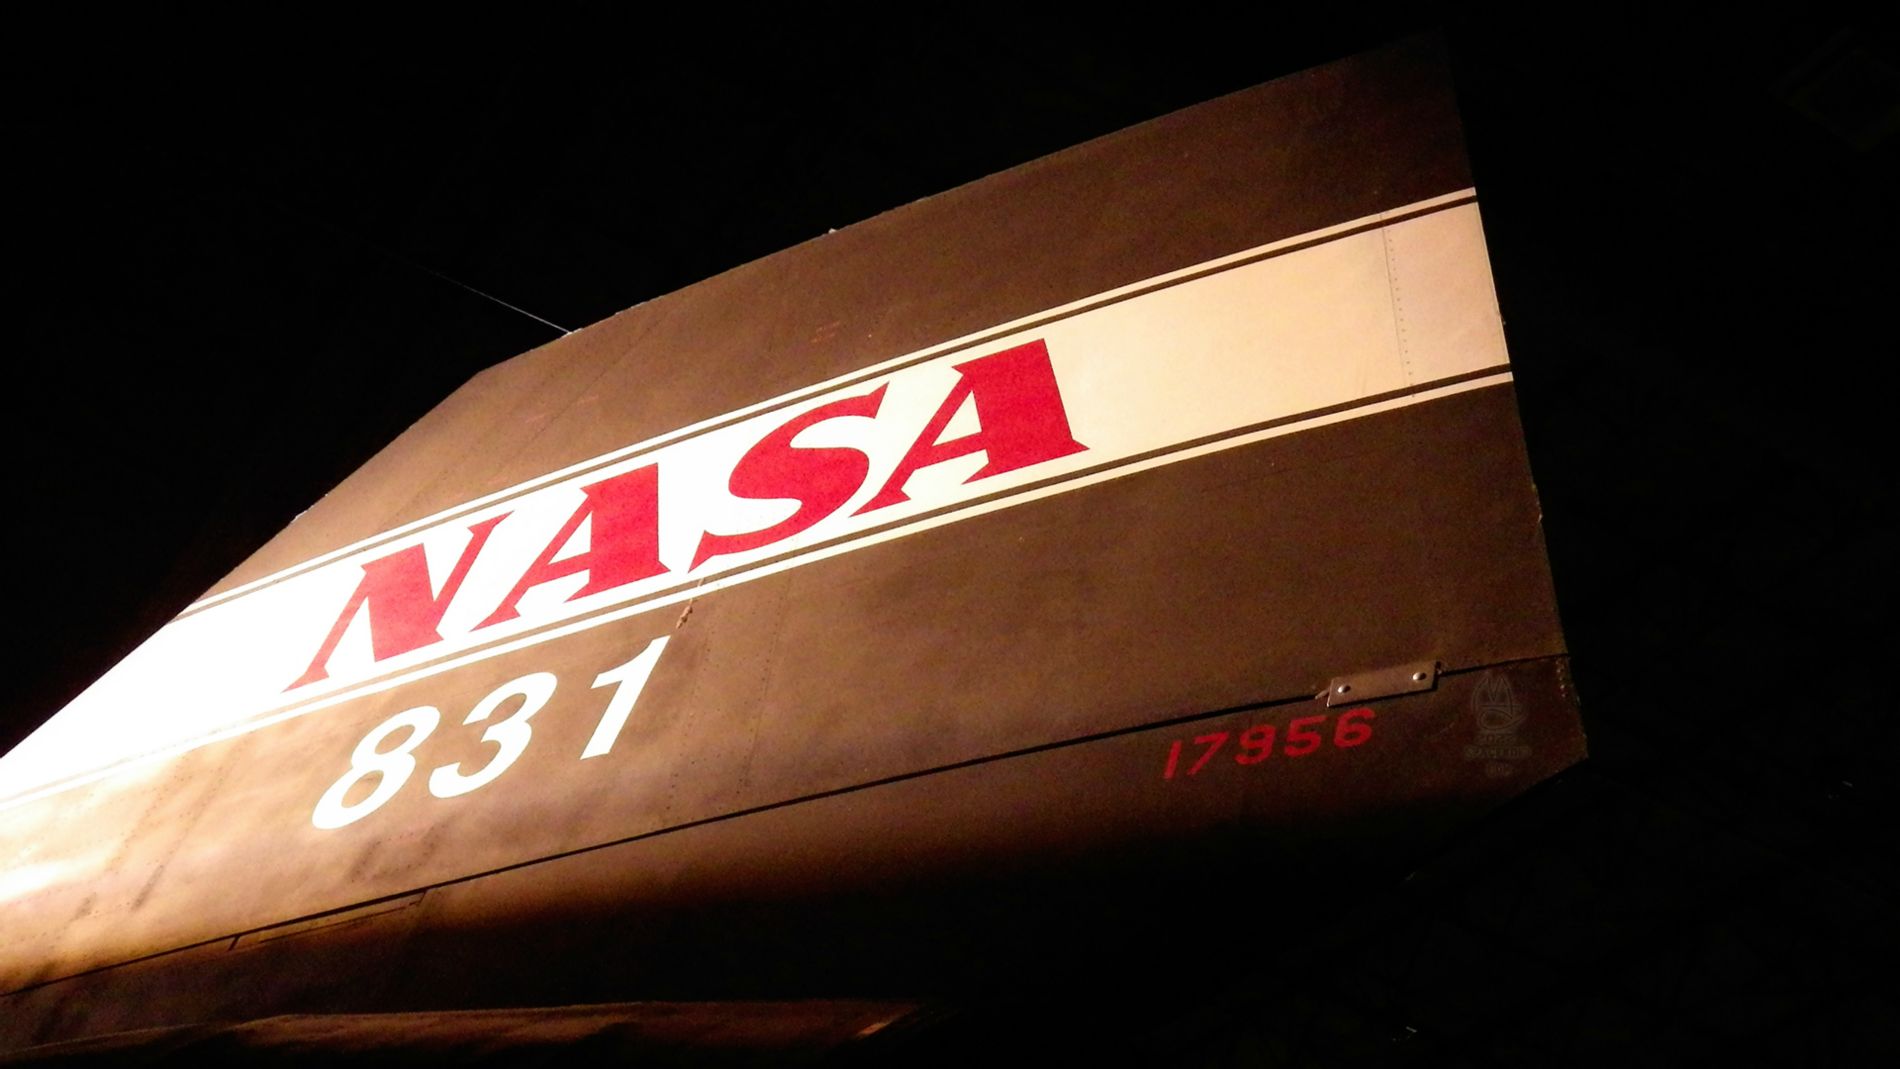 NASA Spaceship.